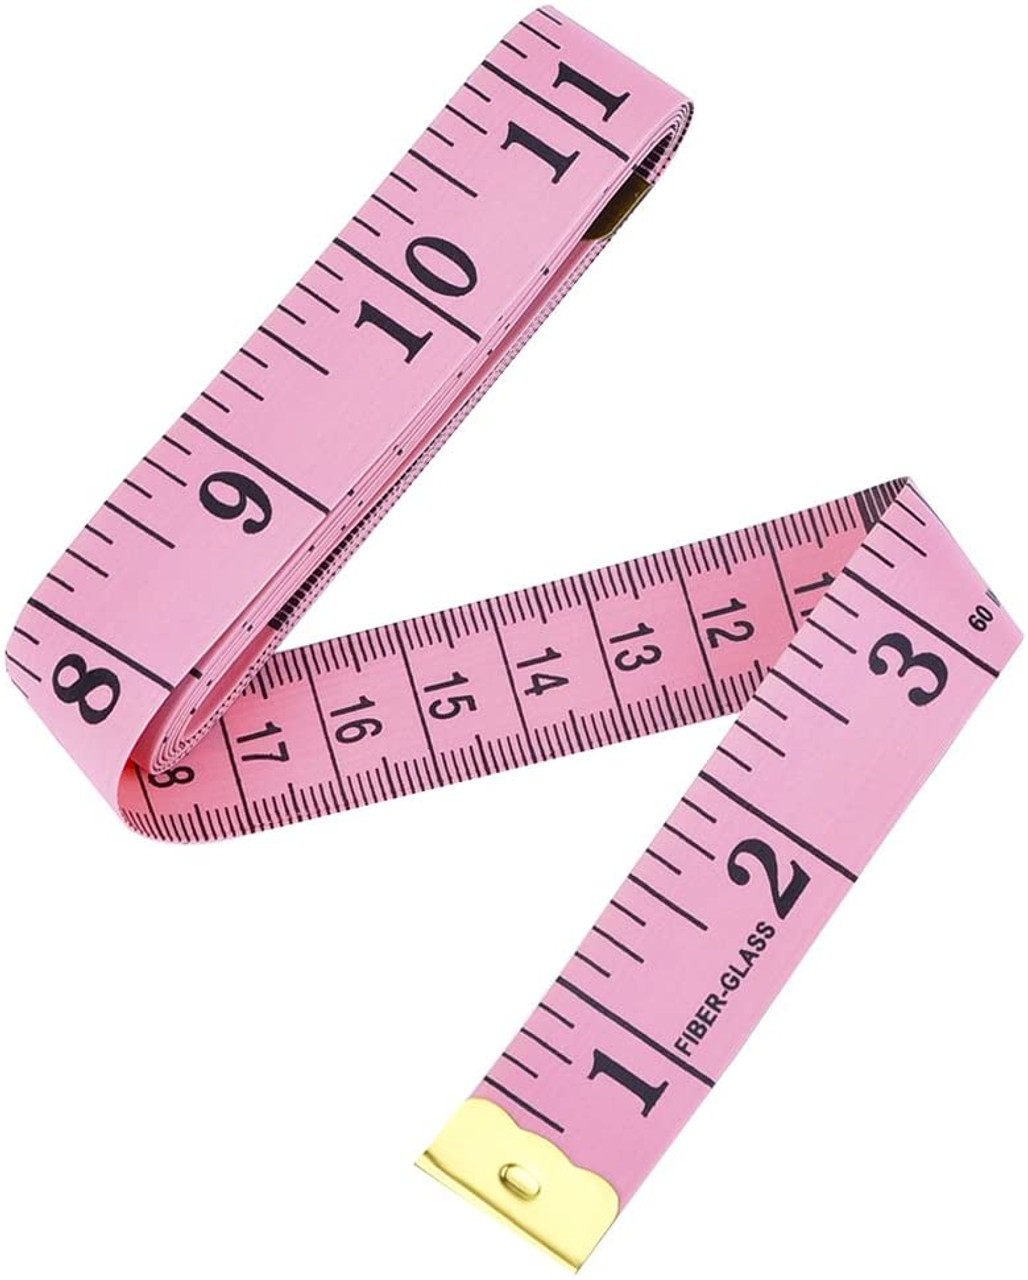 Tape measure - Wikipedia